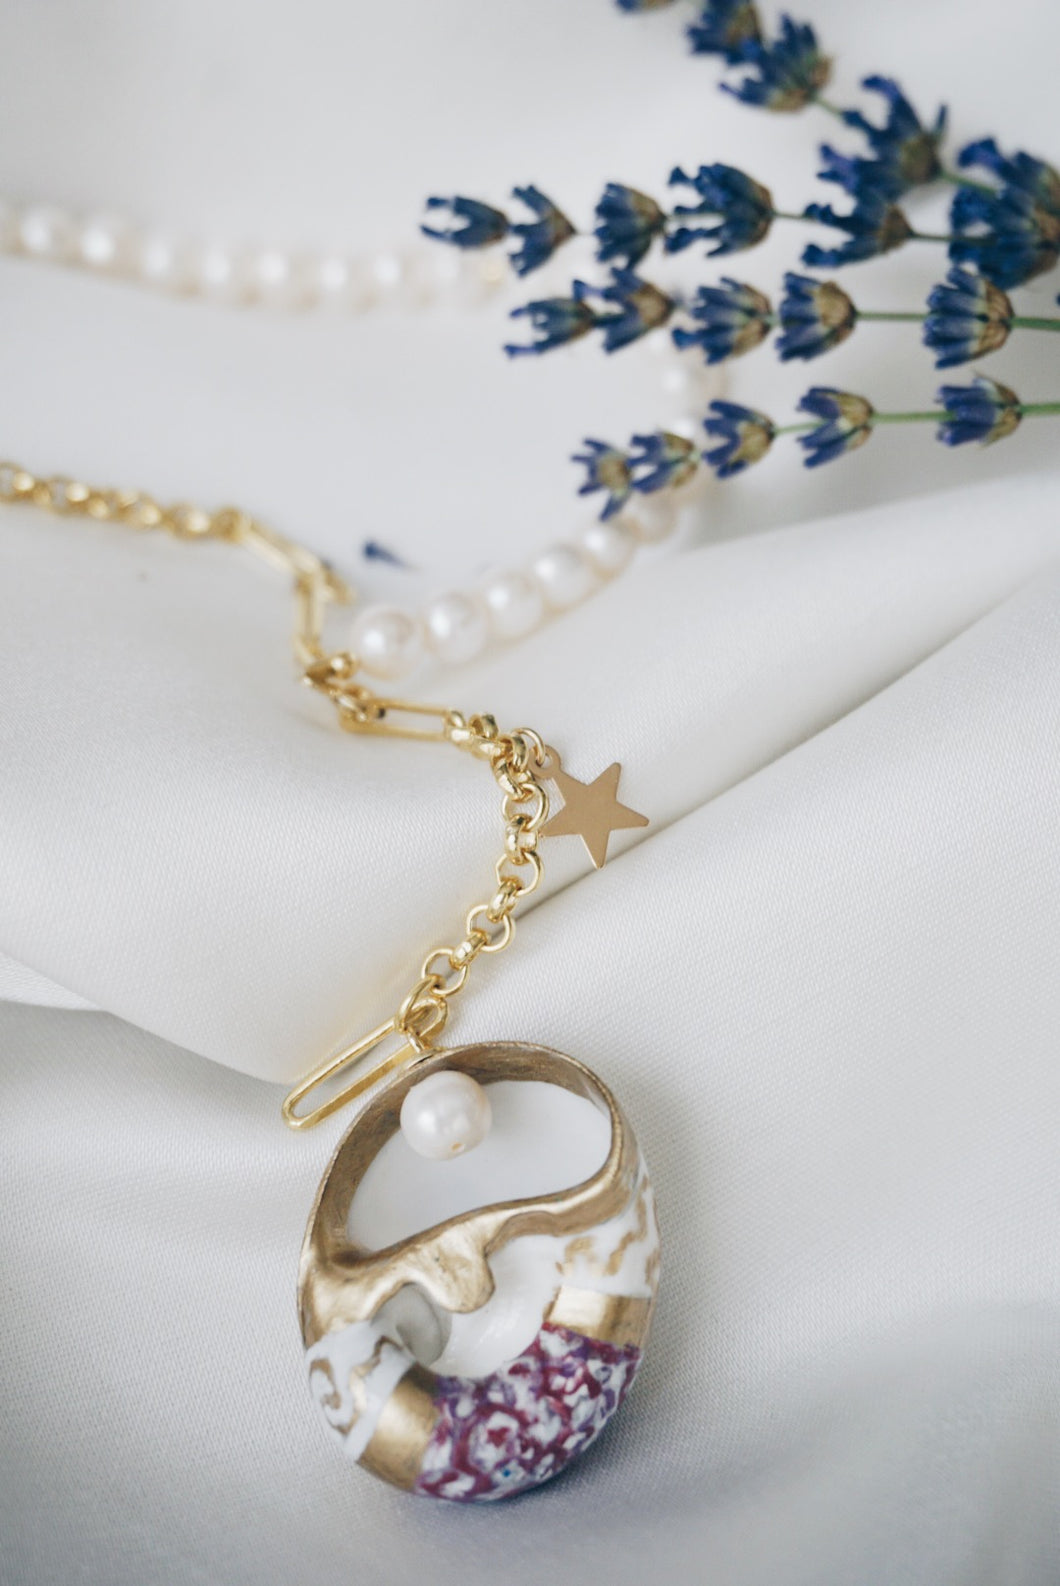 Valencia sea snail necklace